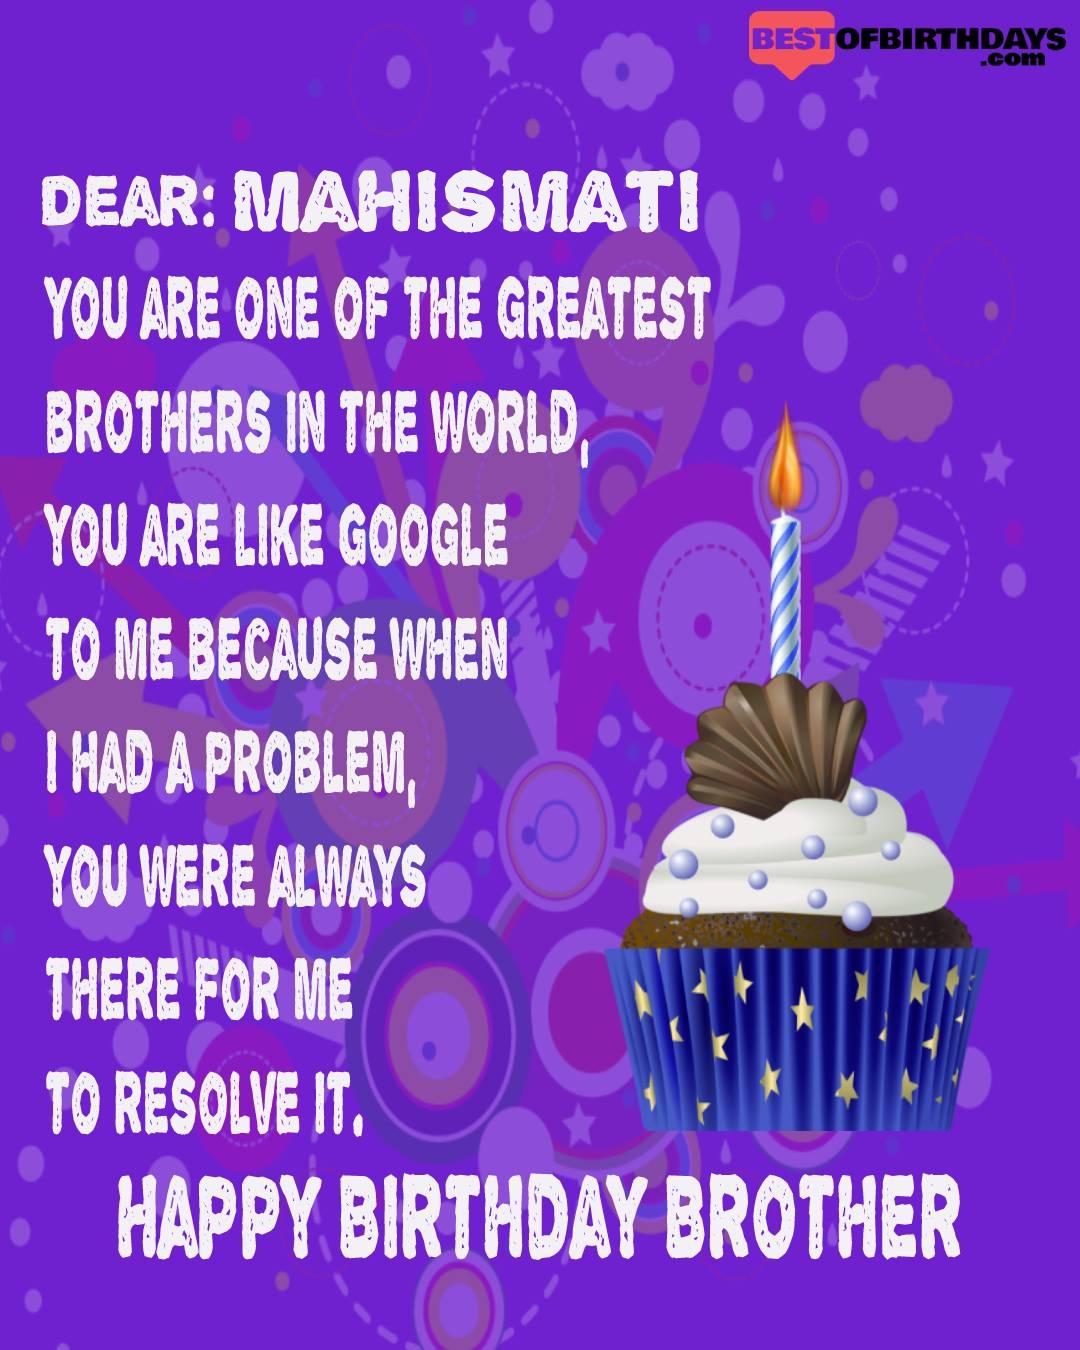 Happy birthday mahismati bhai brother bro